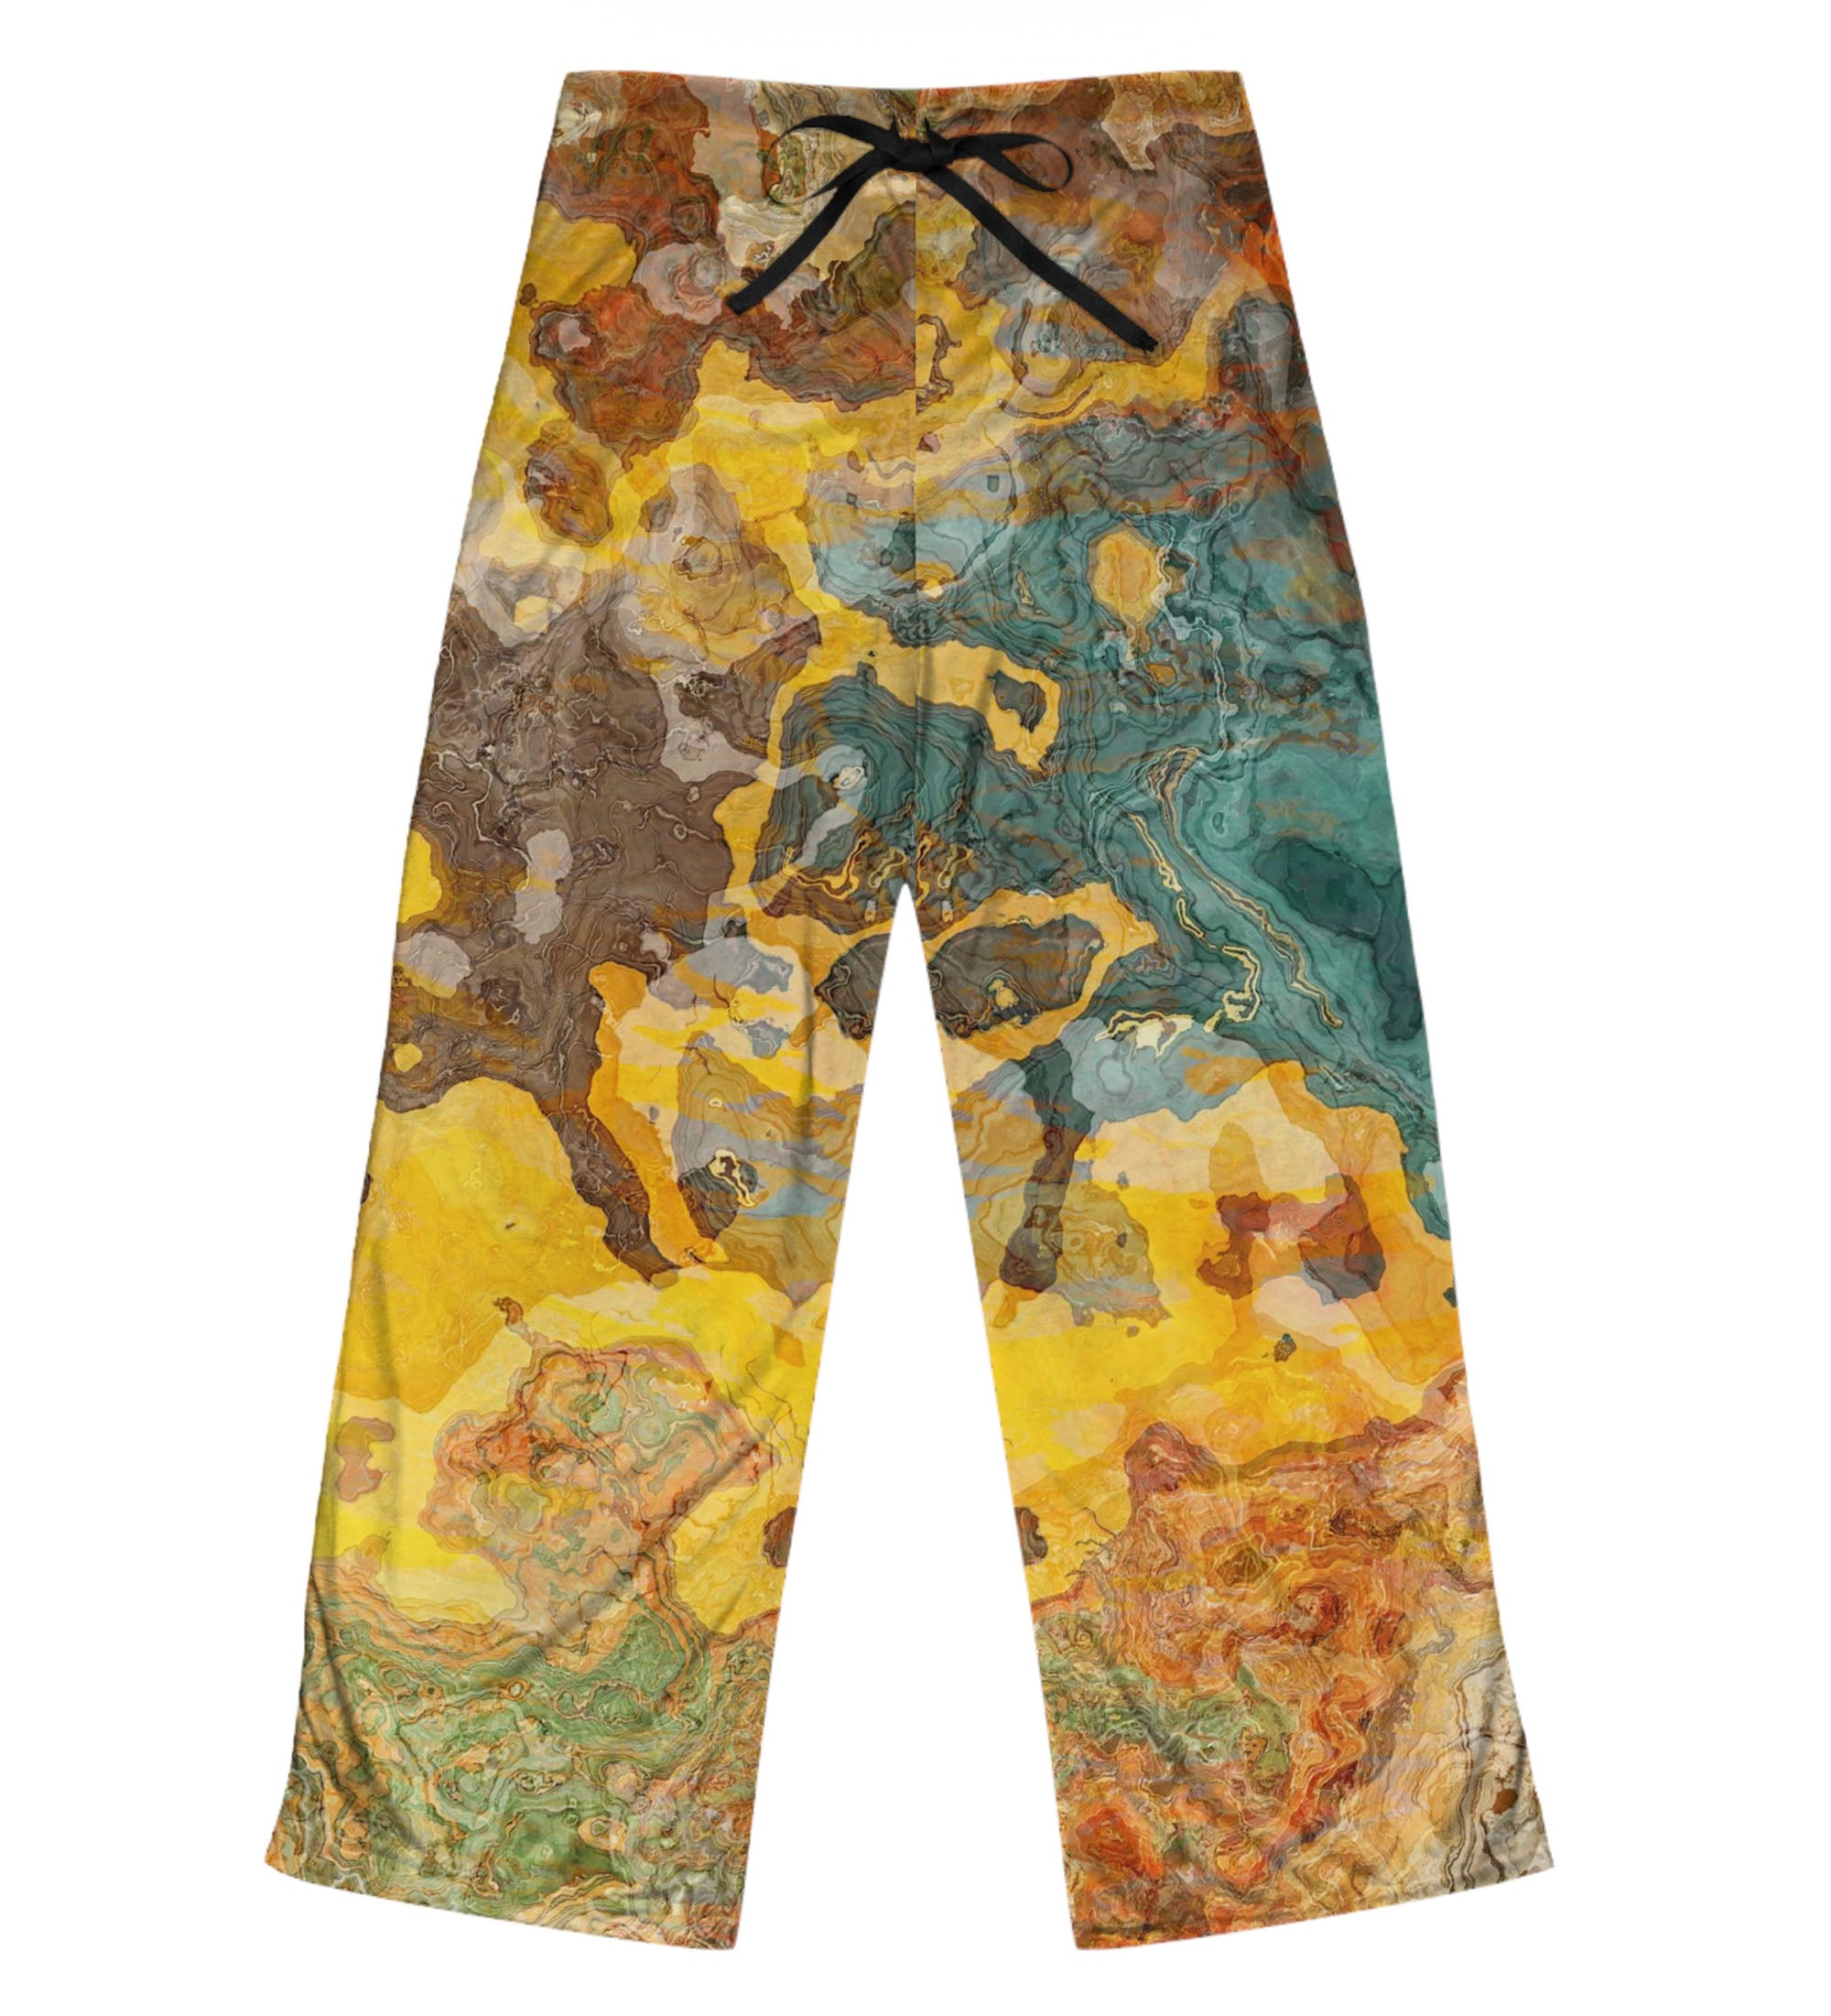 Abstract Art Pajama Pants, Lounge Pants Contemporary Design Yoga